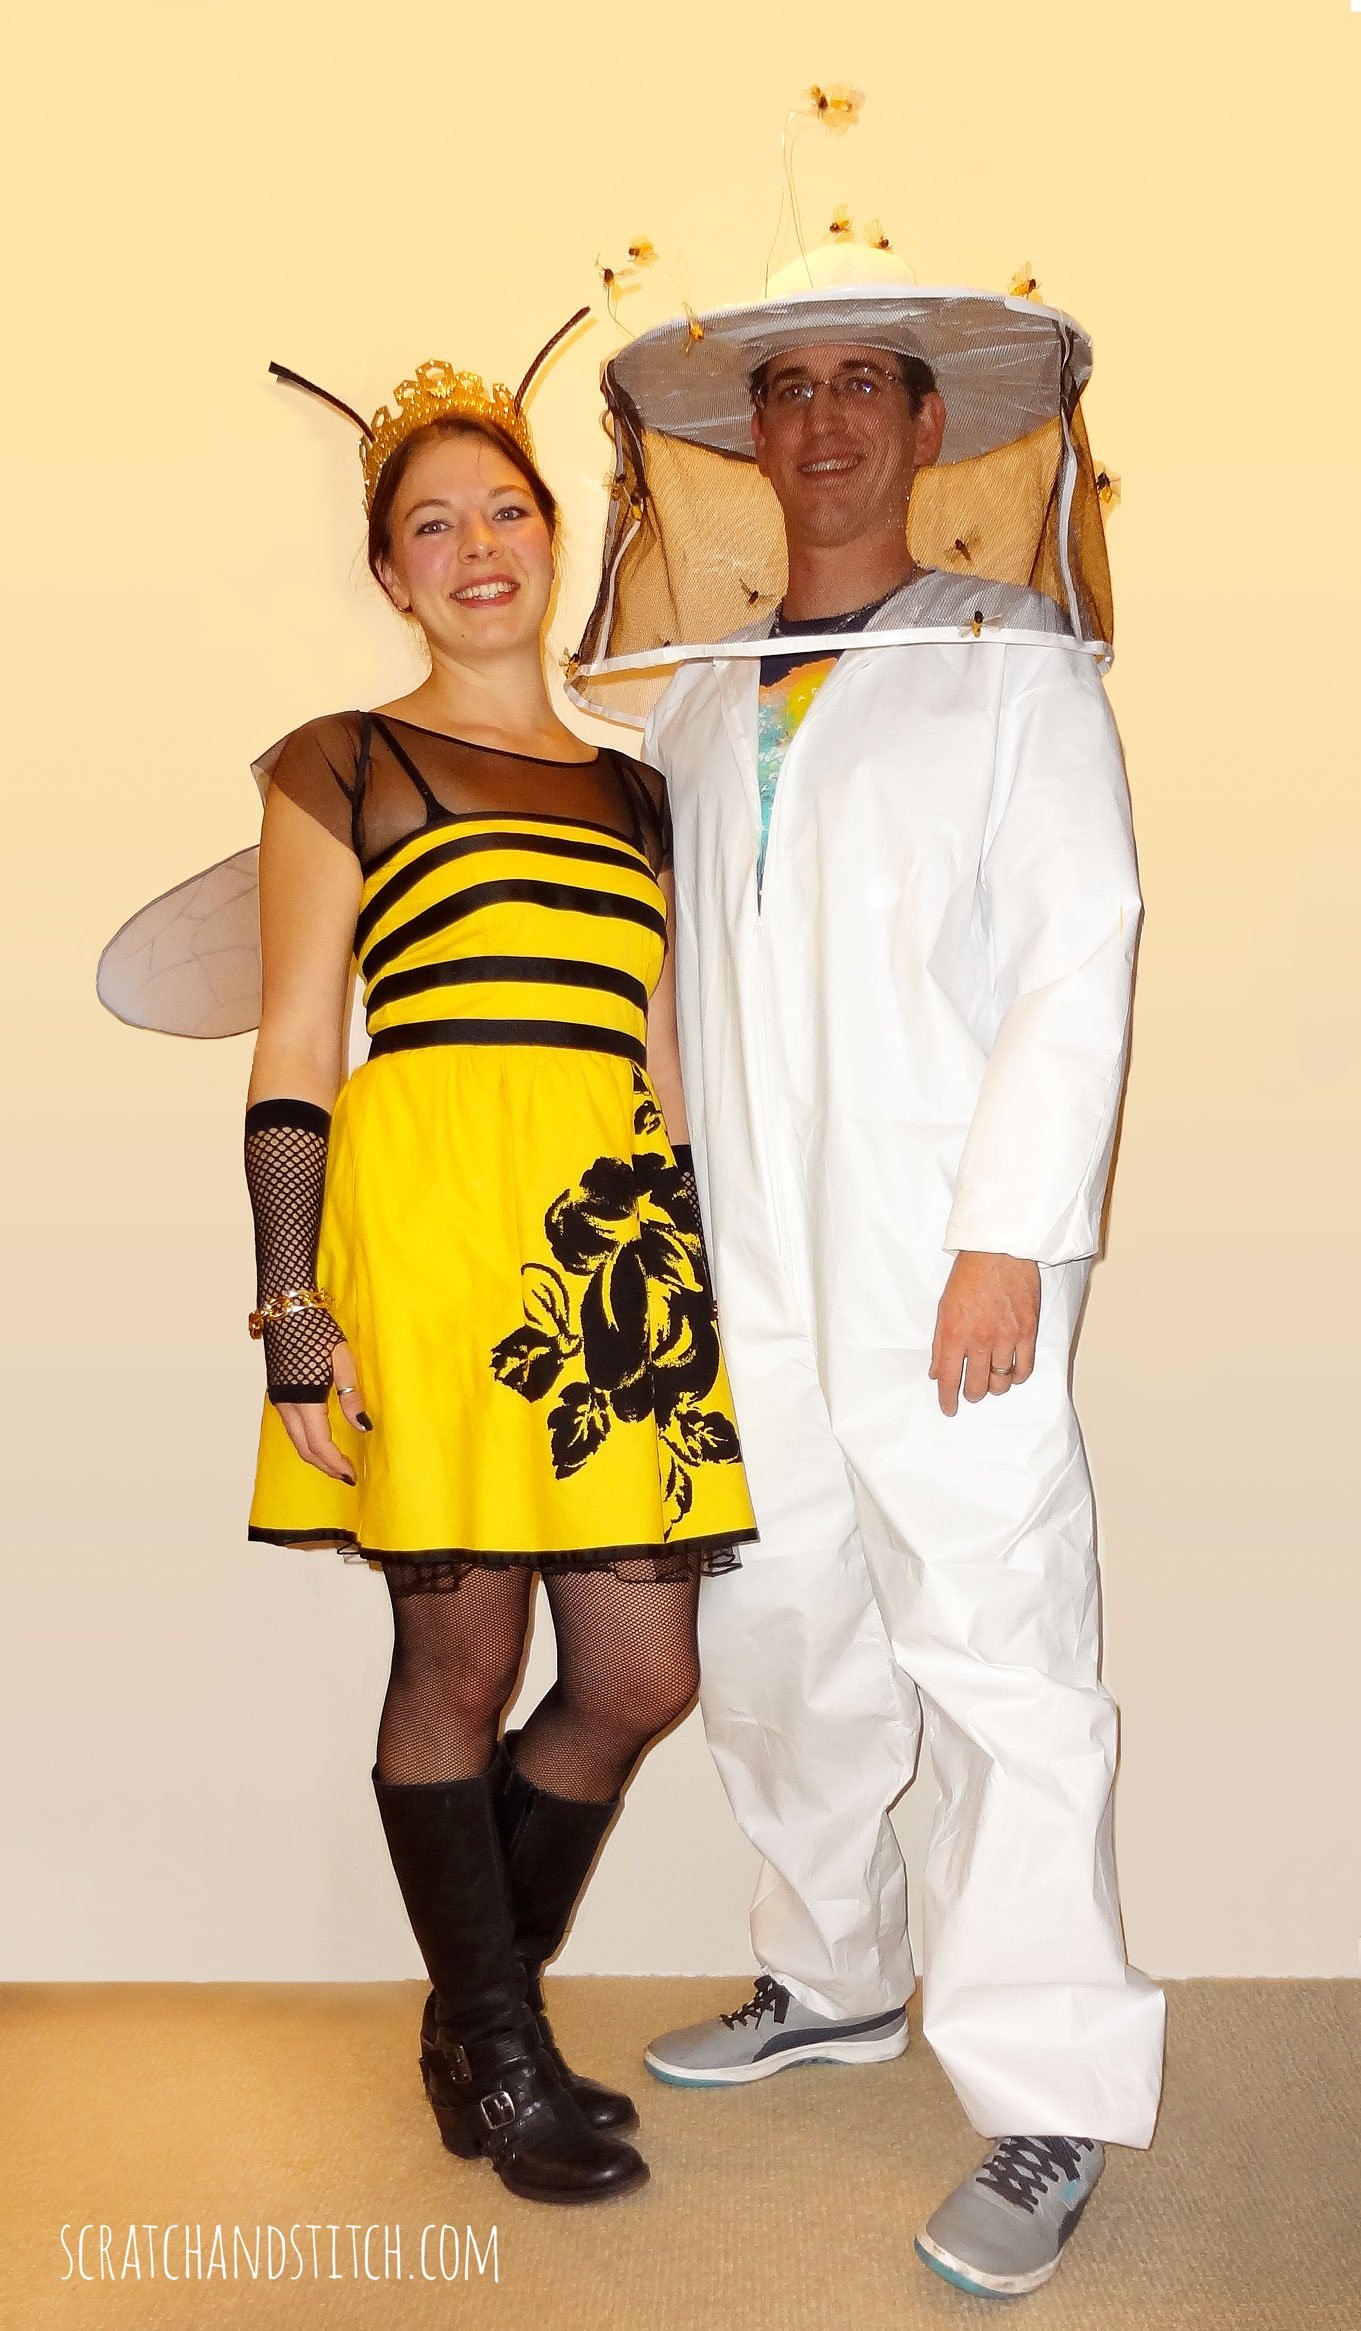 Best ideas about Queen Costume DIY
. Save or Pin Queen Bee Costume & Beekeeper Costume Now.